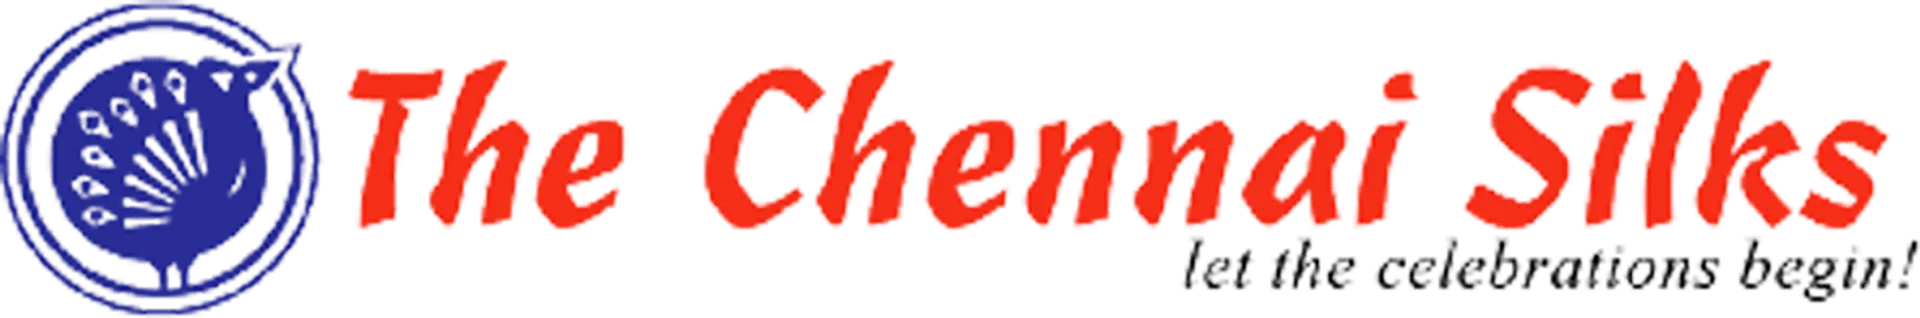 THE CHENNAI SILKS logo. Current weekly ad